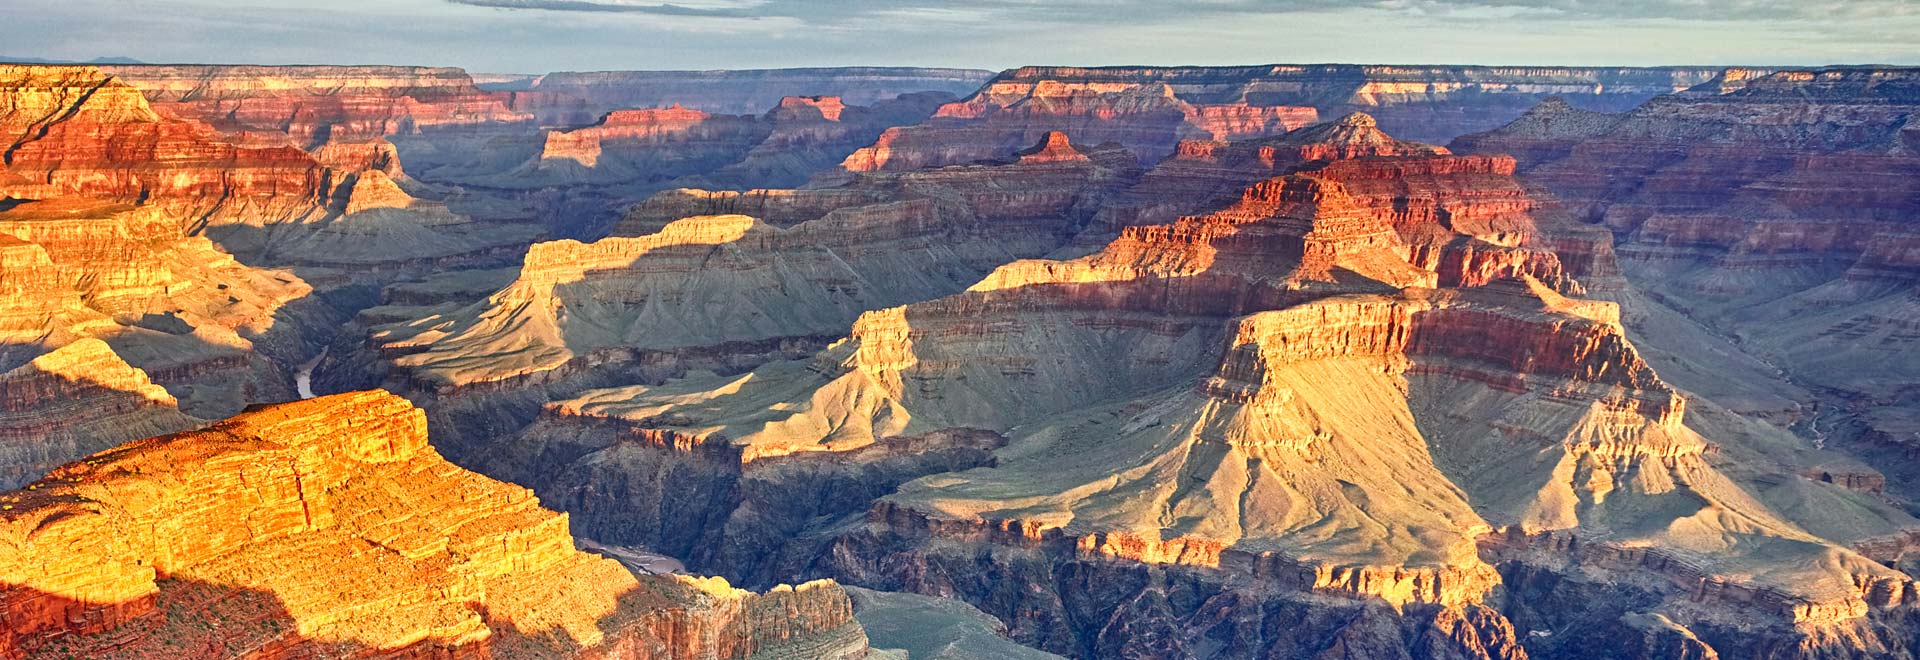 Americas TM National Parks Arizona Utah Grand Canyon MH